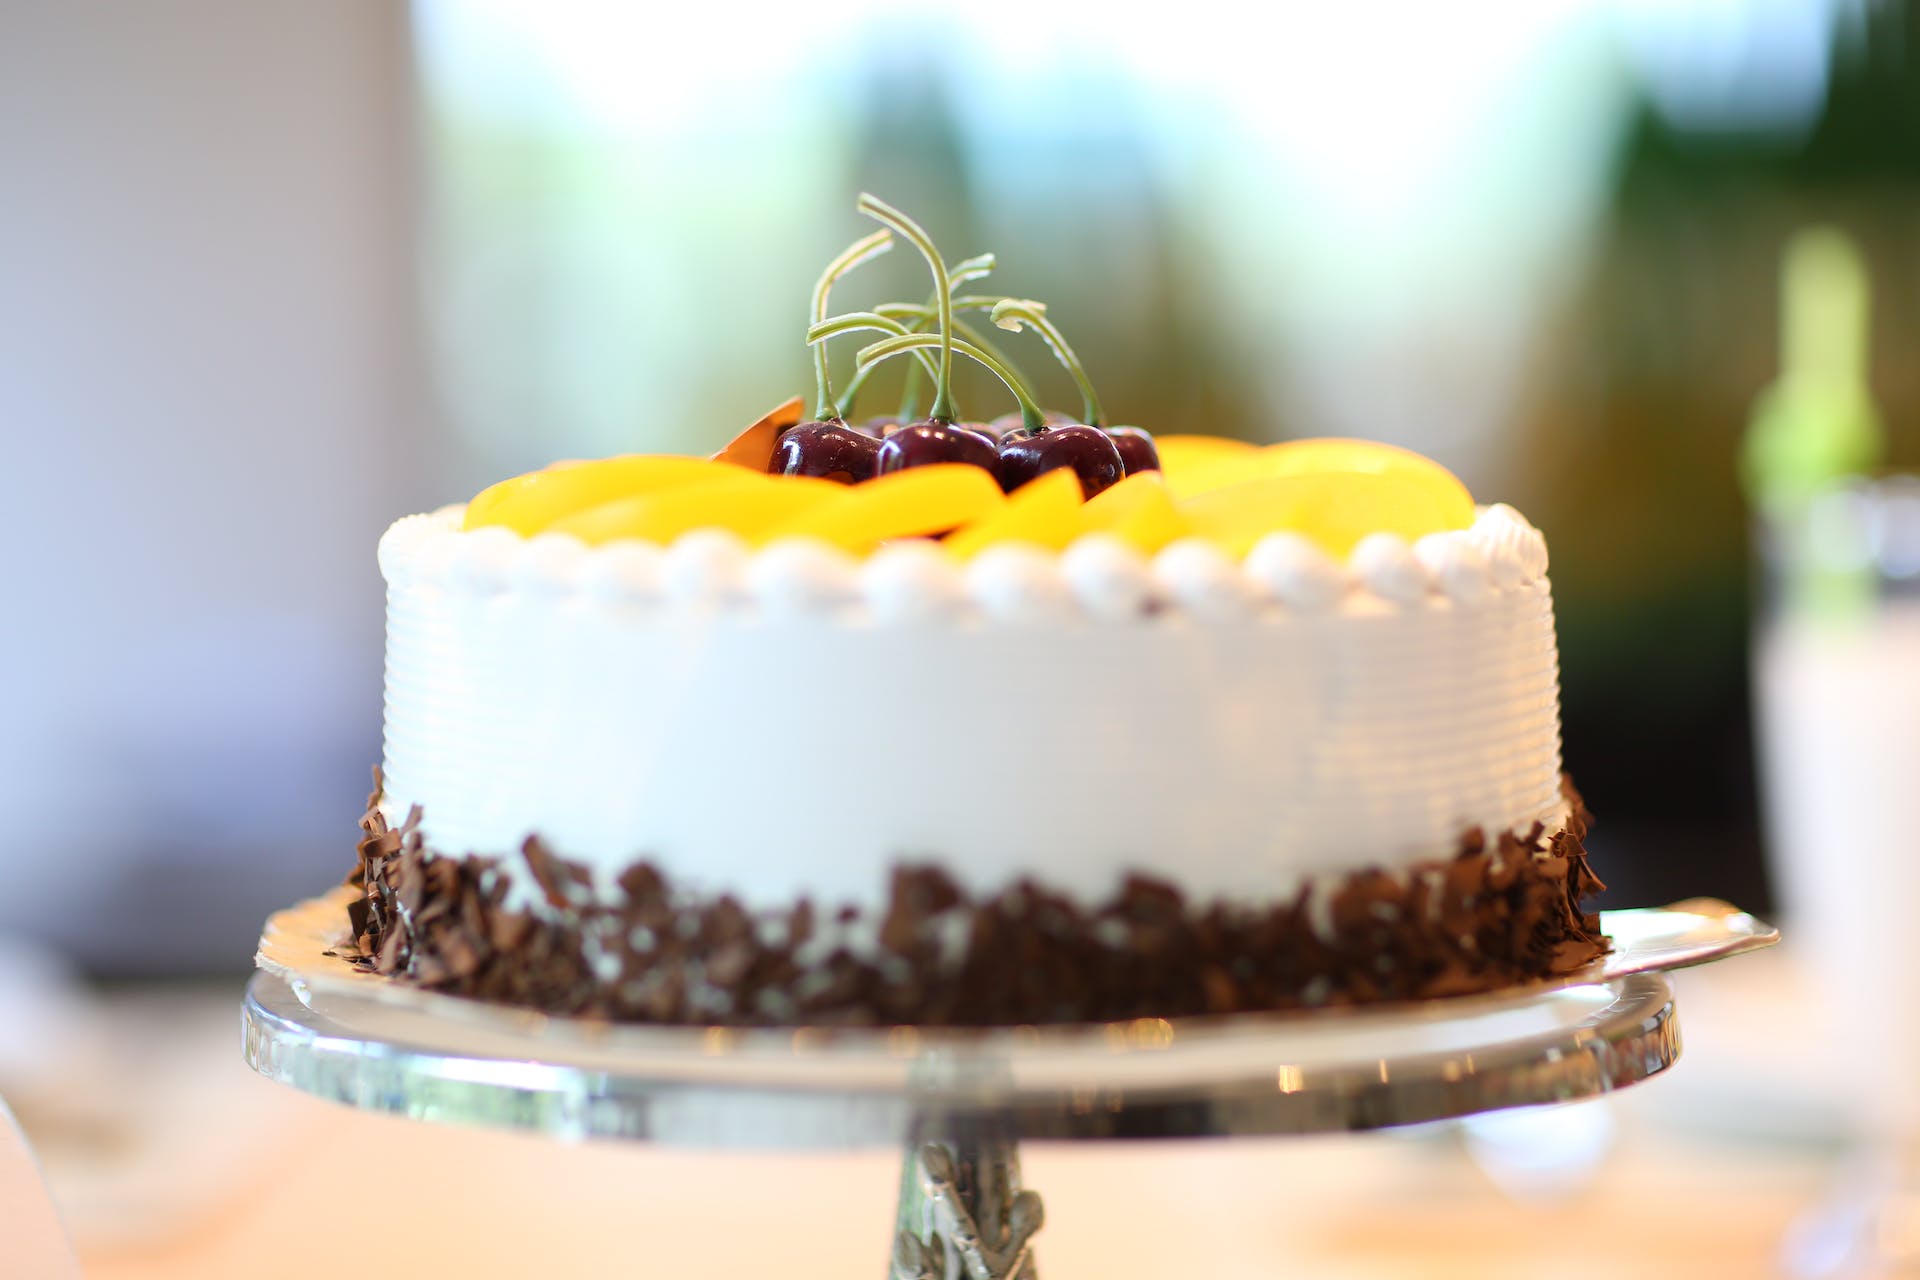 Un gâteau garni de fruits | Source : Pexels